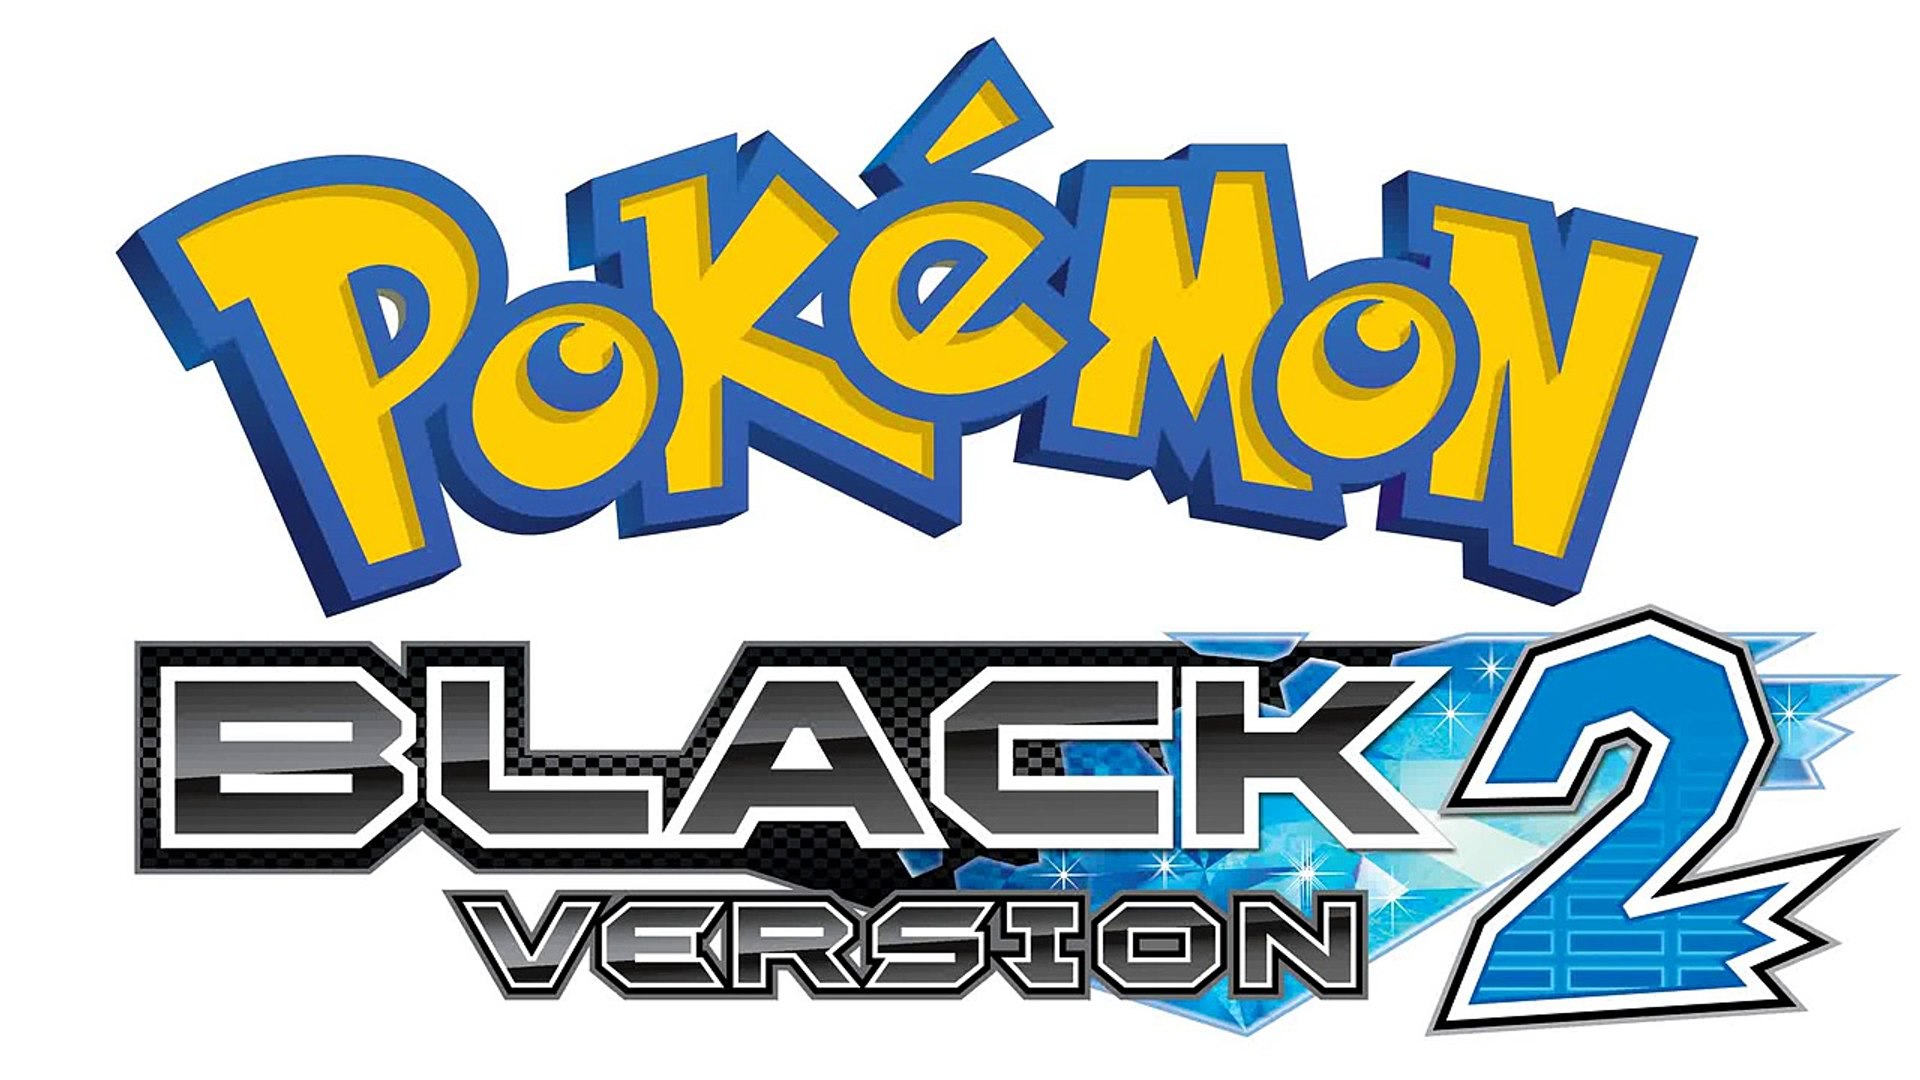 Pokémon Black 2 and White 2 - Gym Leader Theme Extended! 